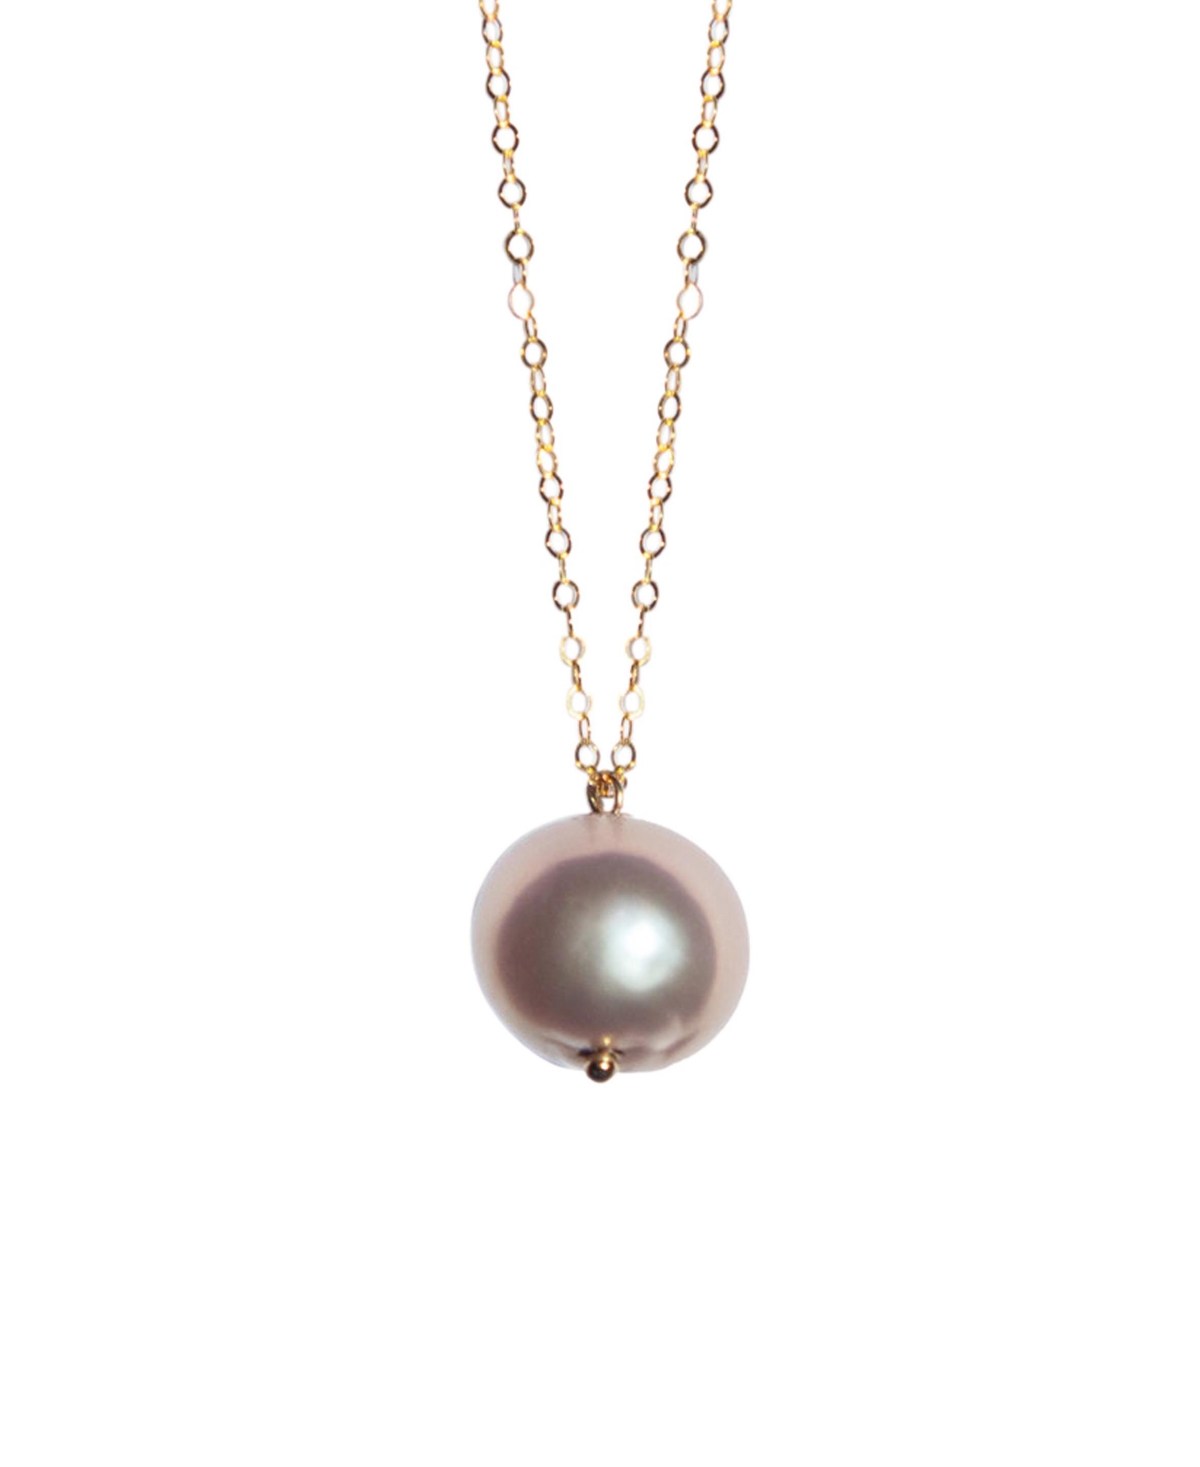 Sadie - Baroque pearl necklace - Open purple